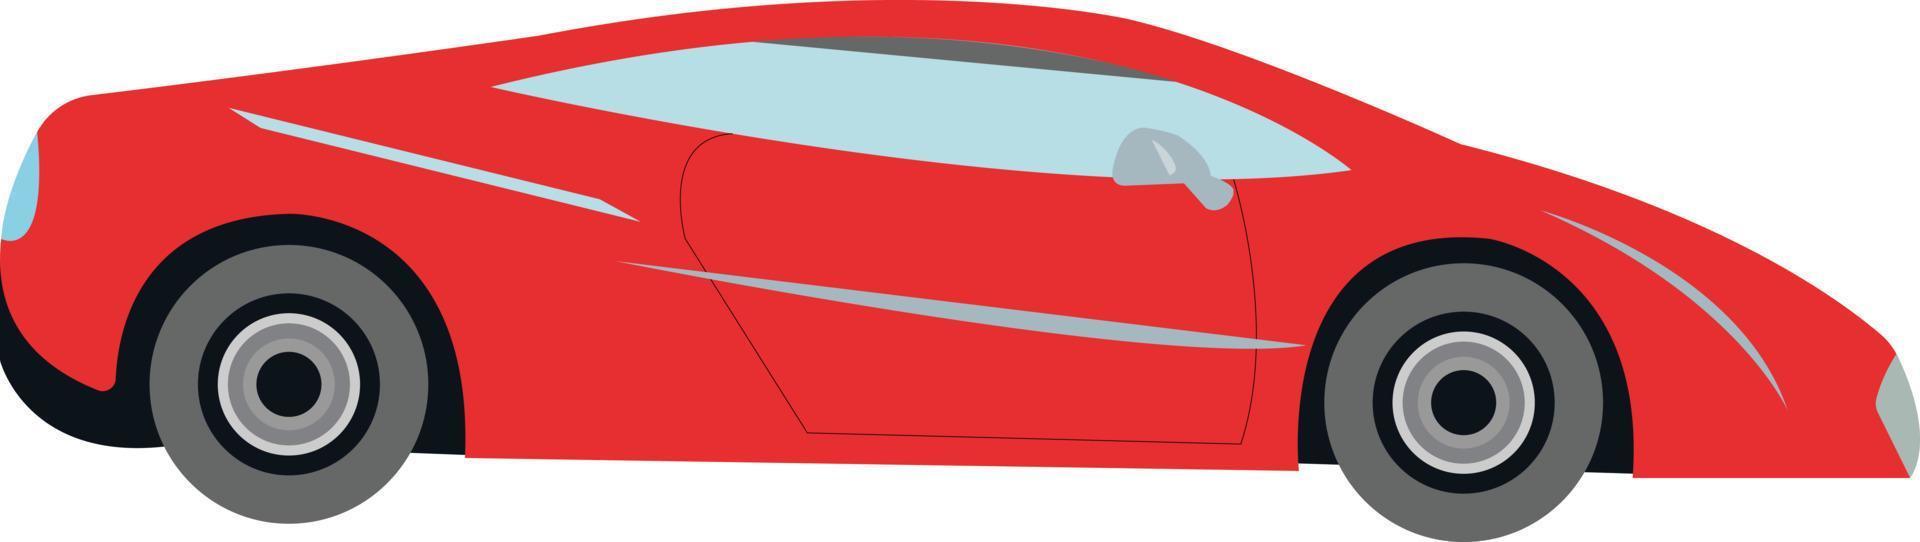 Red Cartoon Car design ready for 2d Animation vector